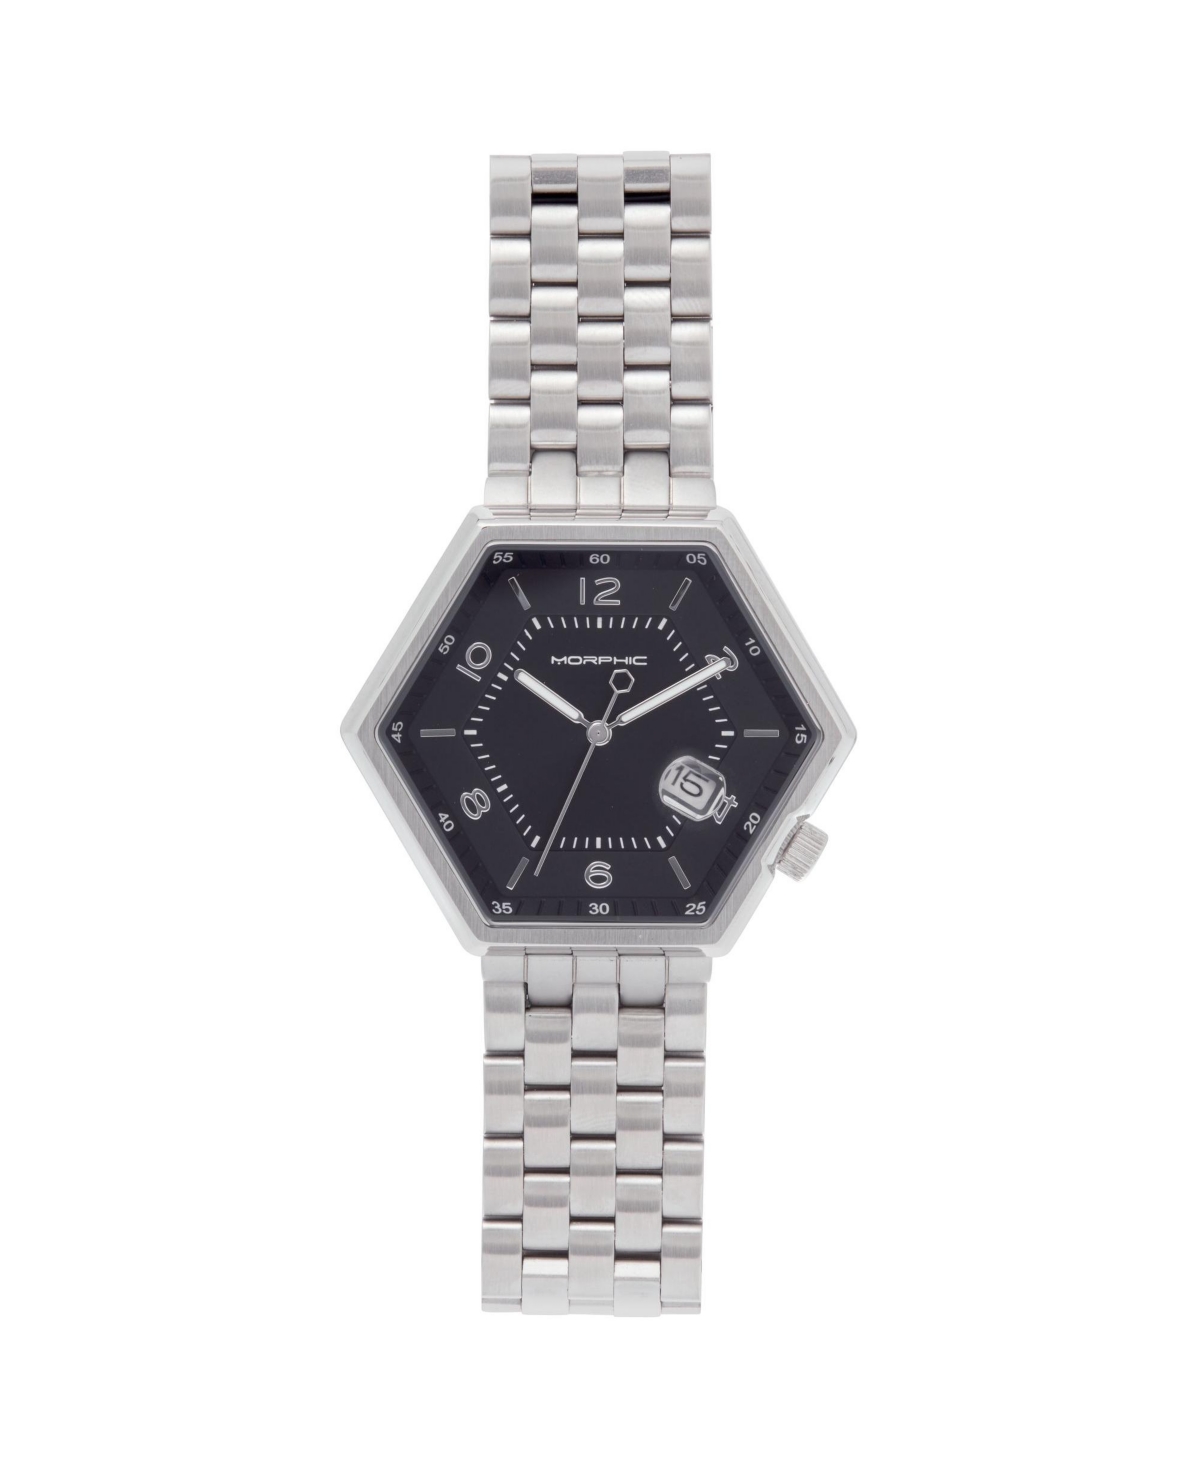 Men M95 Series Stainless Steel Watch - Black/Silver, 45mm - Black/silver